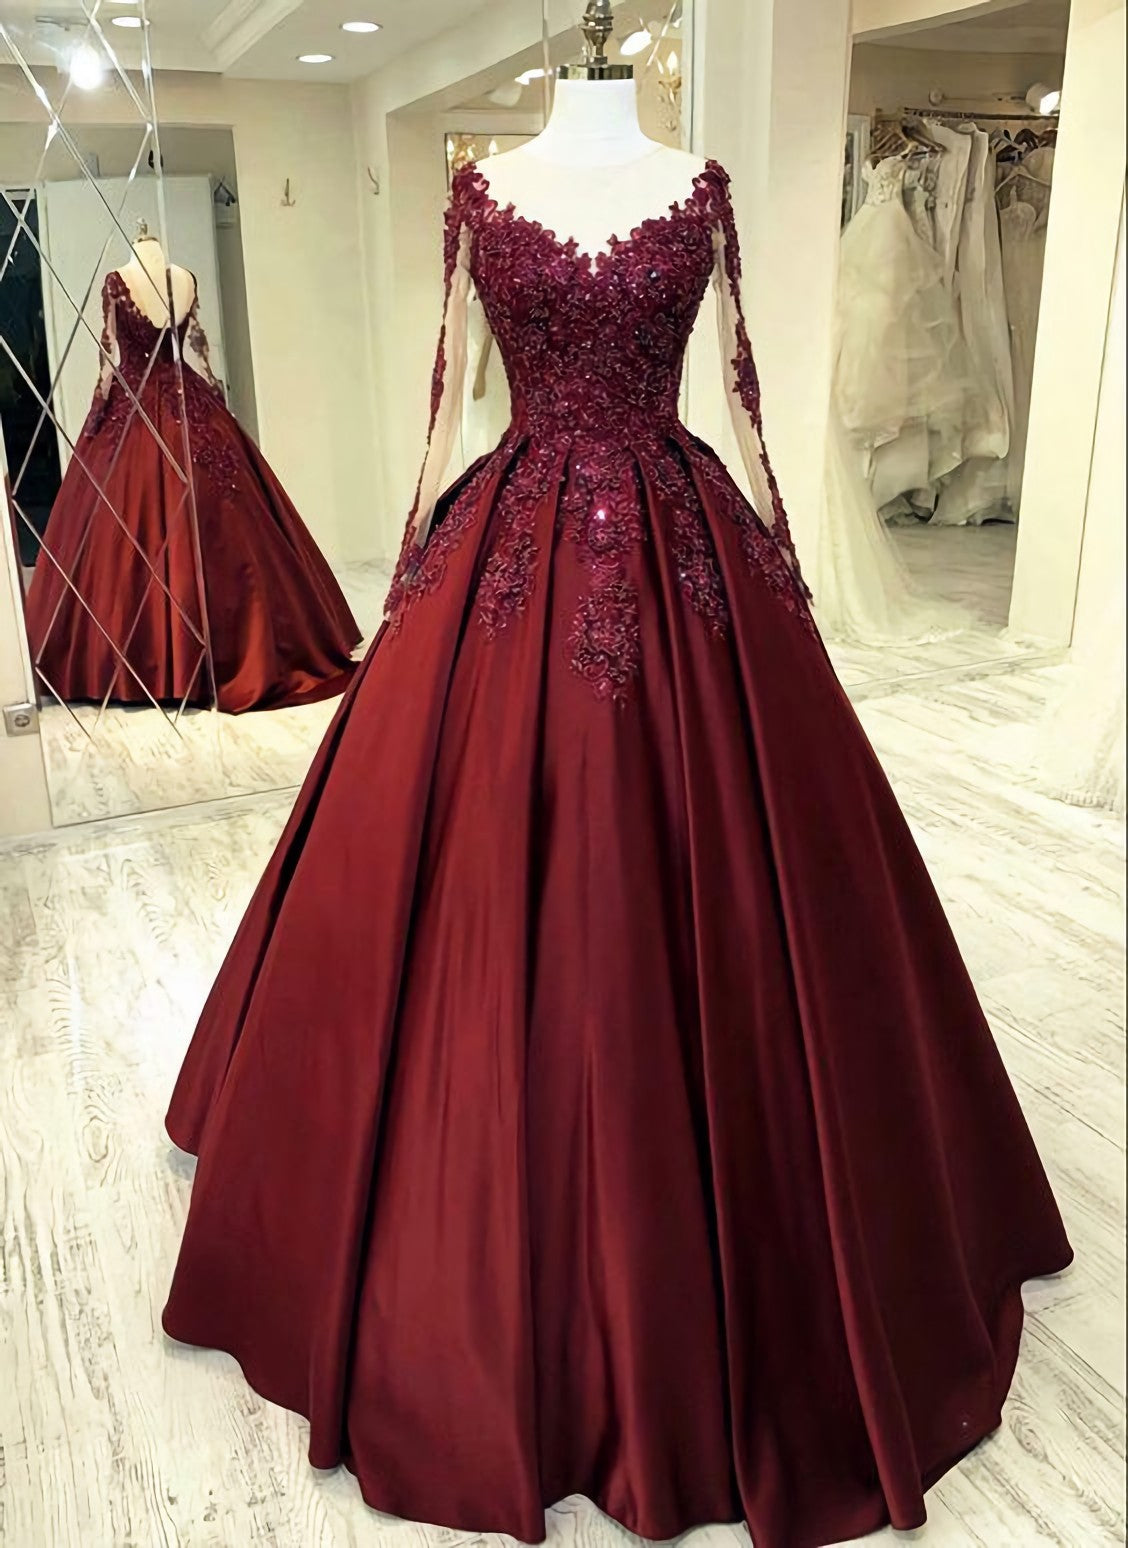 Burgundy Corset Wedding Dresses, Long Sleeves Corset Prom Dress outfits, Wedding Dresse Vintage